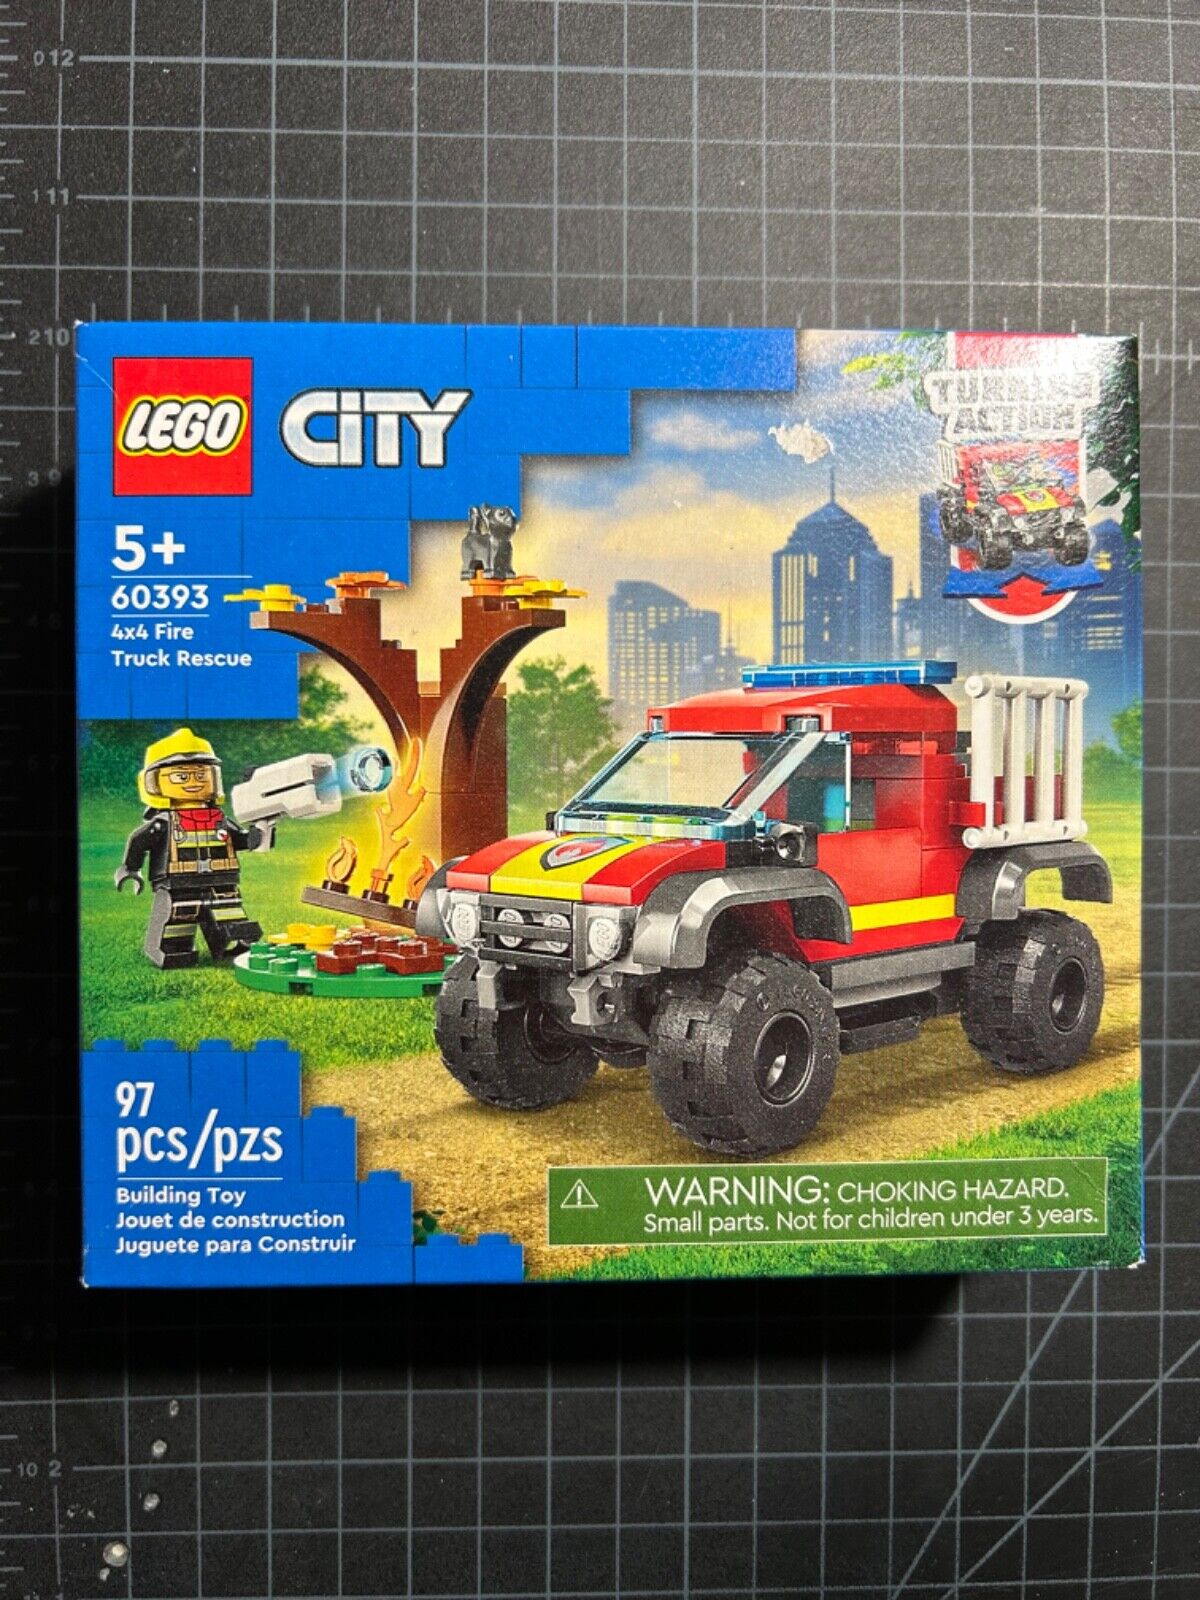 LEGO CITY: 4x4 Fire Truck Rescue (60393)